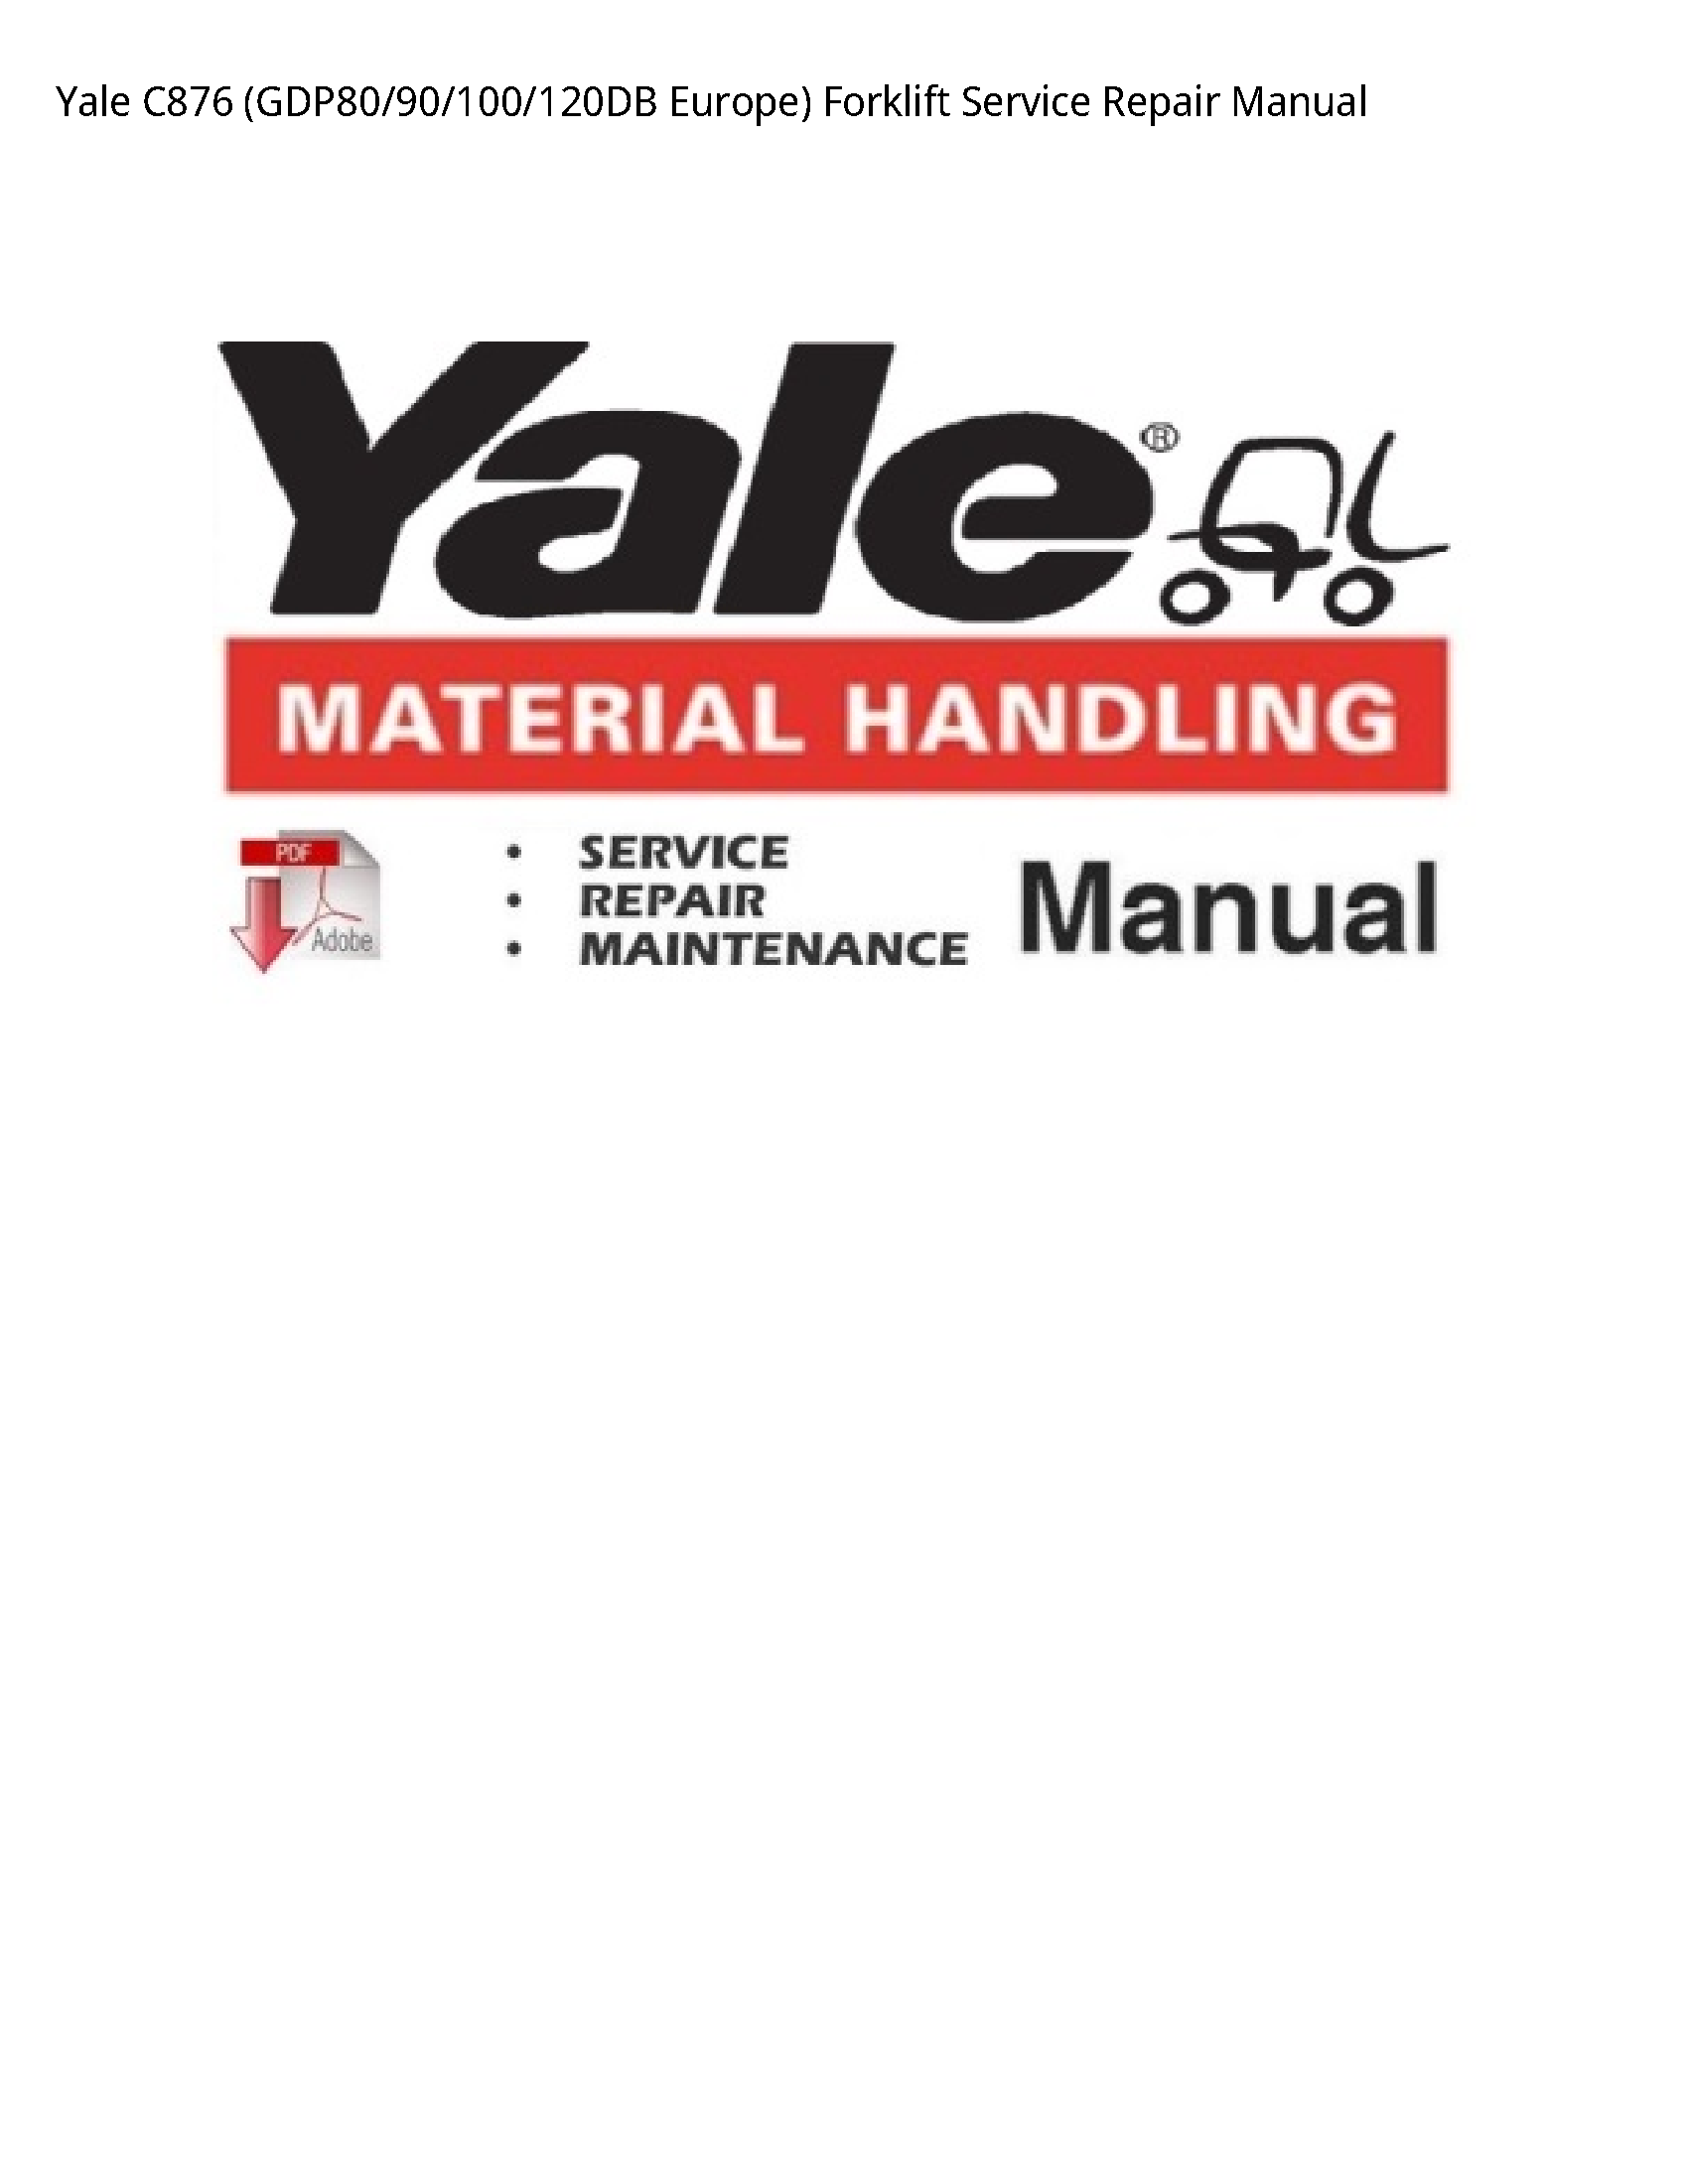 Yale C876 Europe) Forklift manual